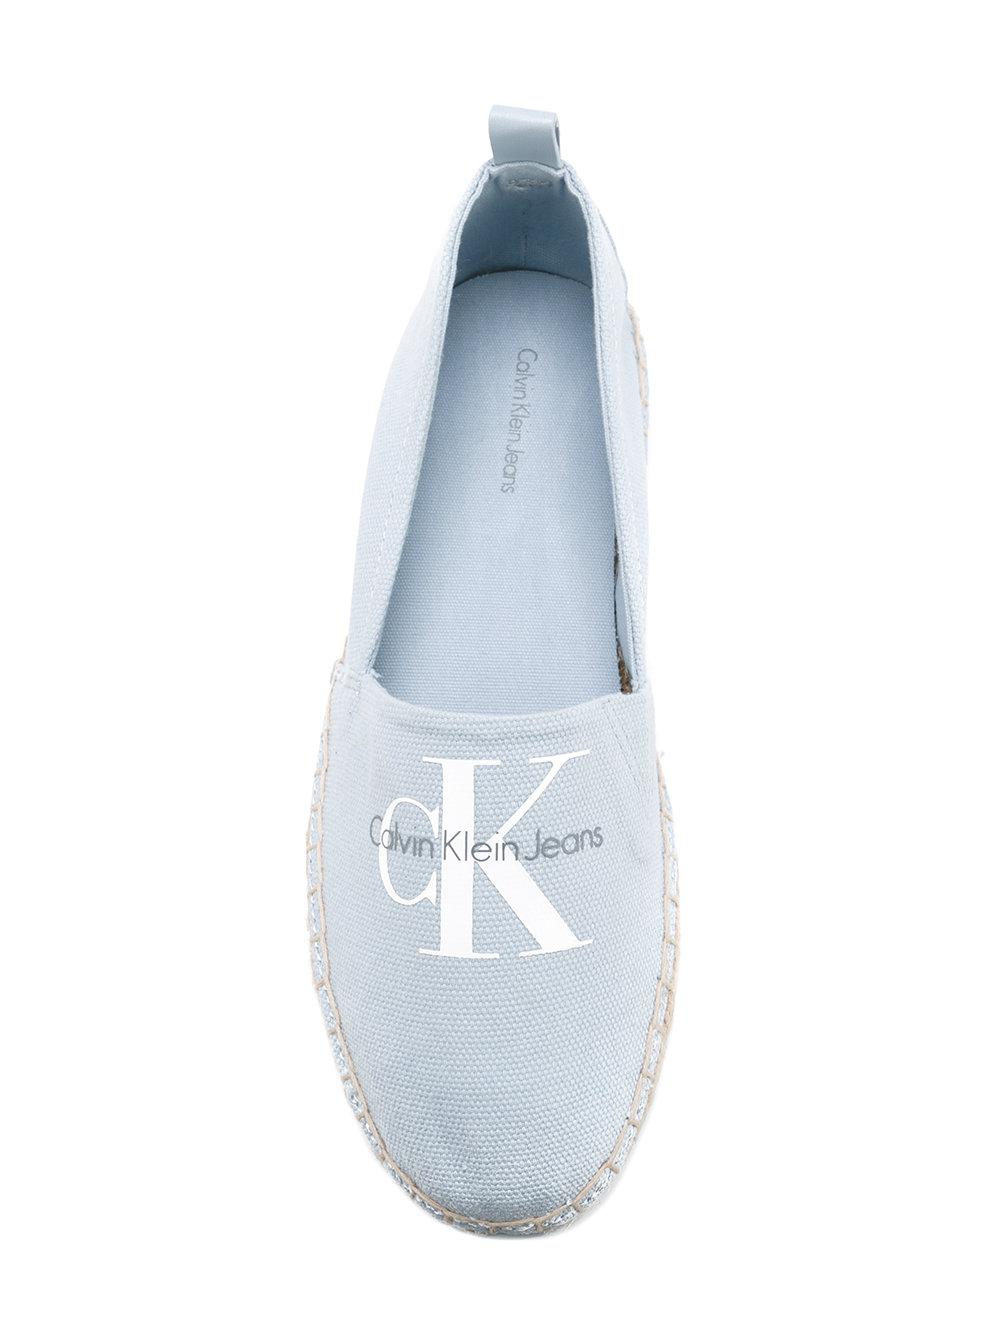 Calvin Klein Genna Canvas Espadrille Shoes Fashionable Design, 57% OFF |  fames.org.br